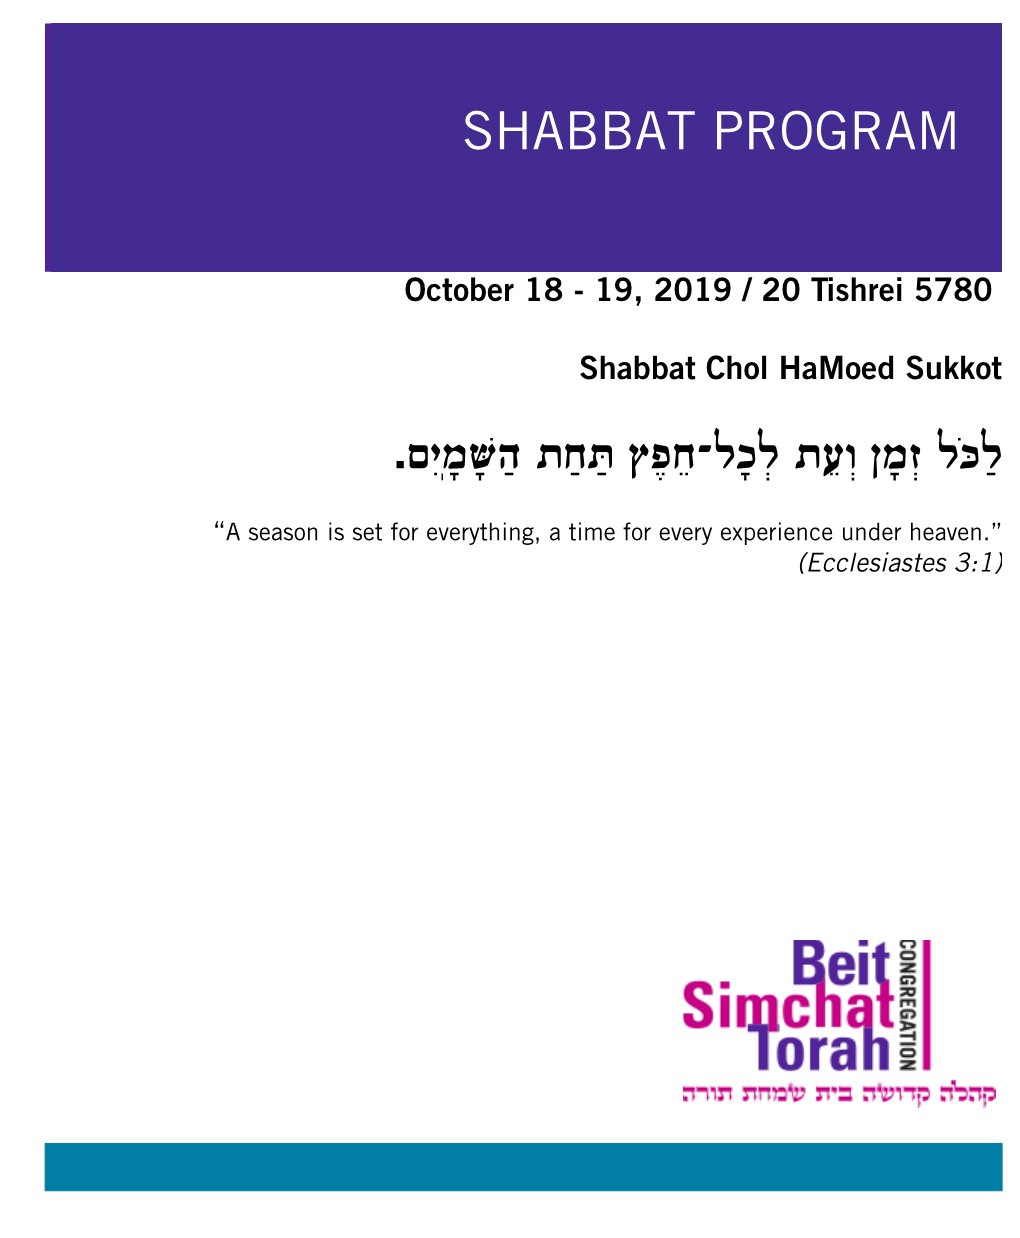 19, 2019 / 20 Tishrei 5780 Shabbat Chol Hamoed Sukkot